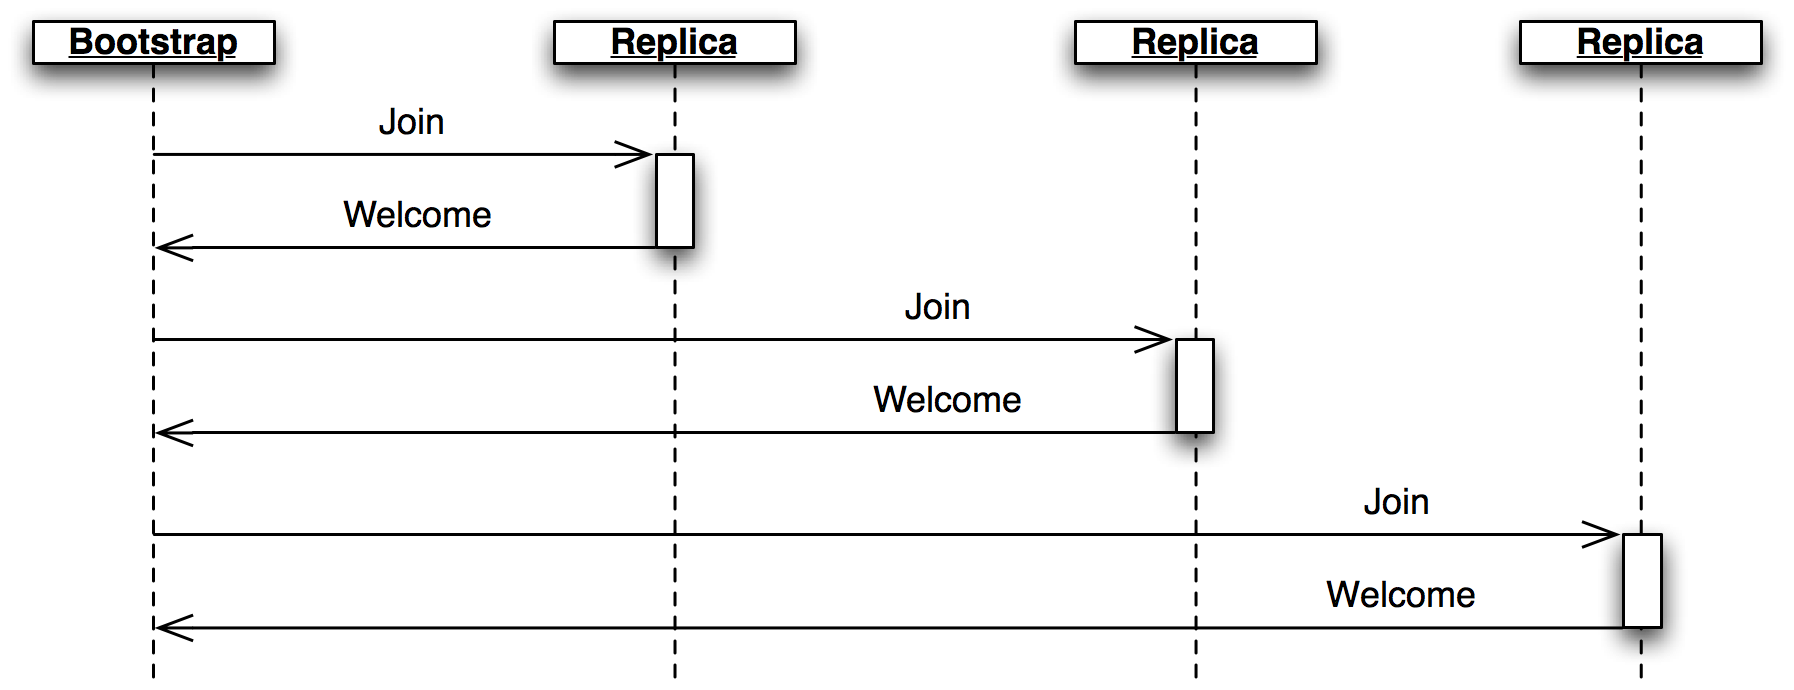 Figure 3.6 - Bootstrap